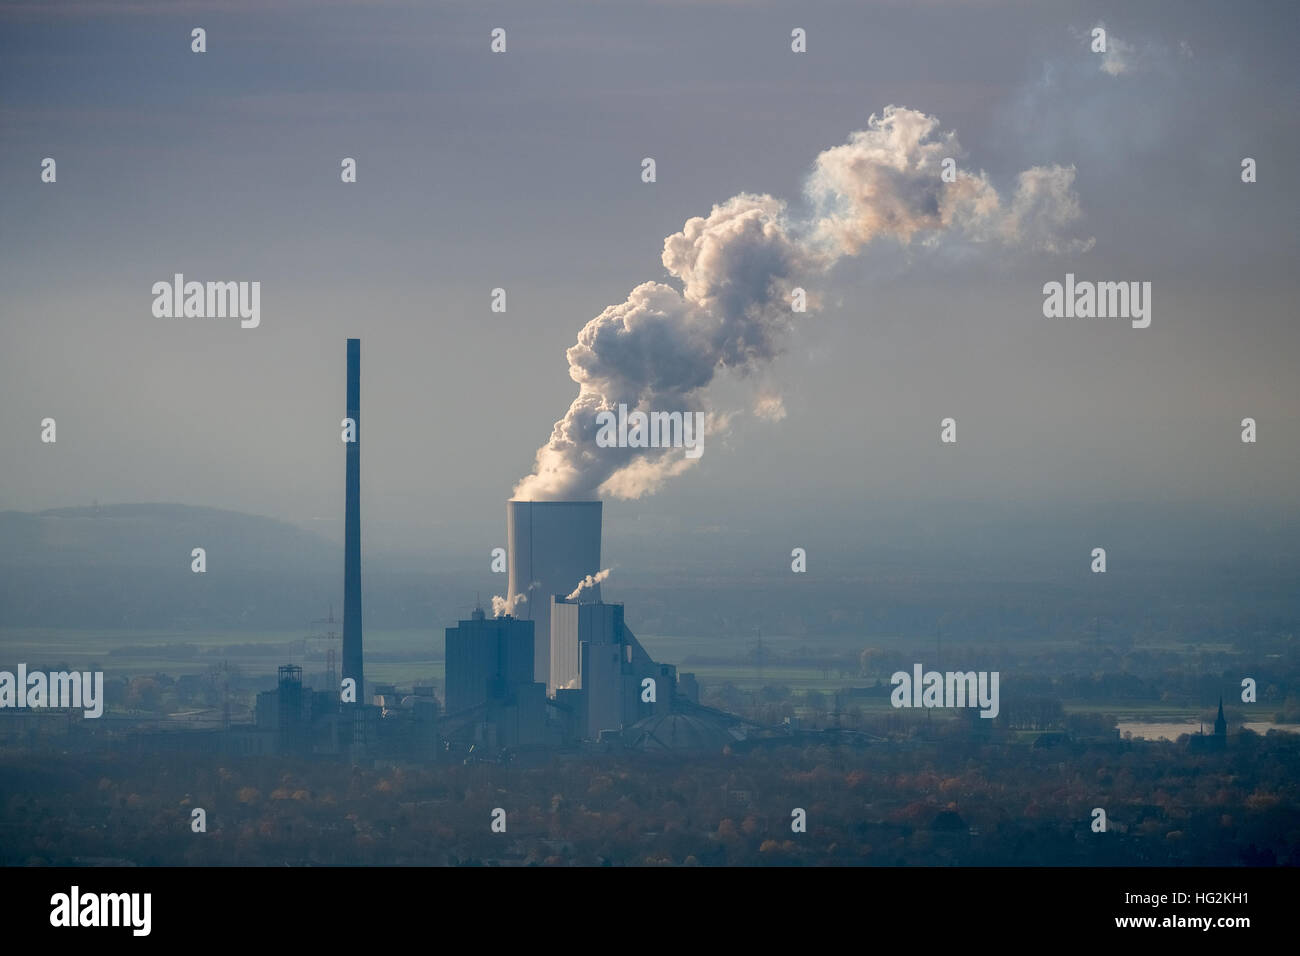 Luftaufnahme, STEAG Walsum Kraftwerk, Kohlekraftwerk, fossile Energie, Turm, Rauch, Duisburg, Ruhr Aeria Kühlung, Stockfoto